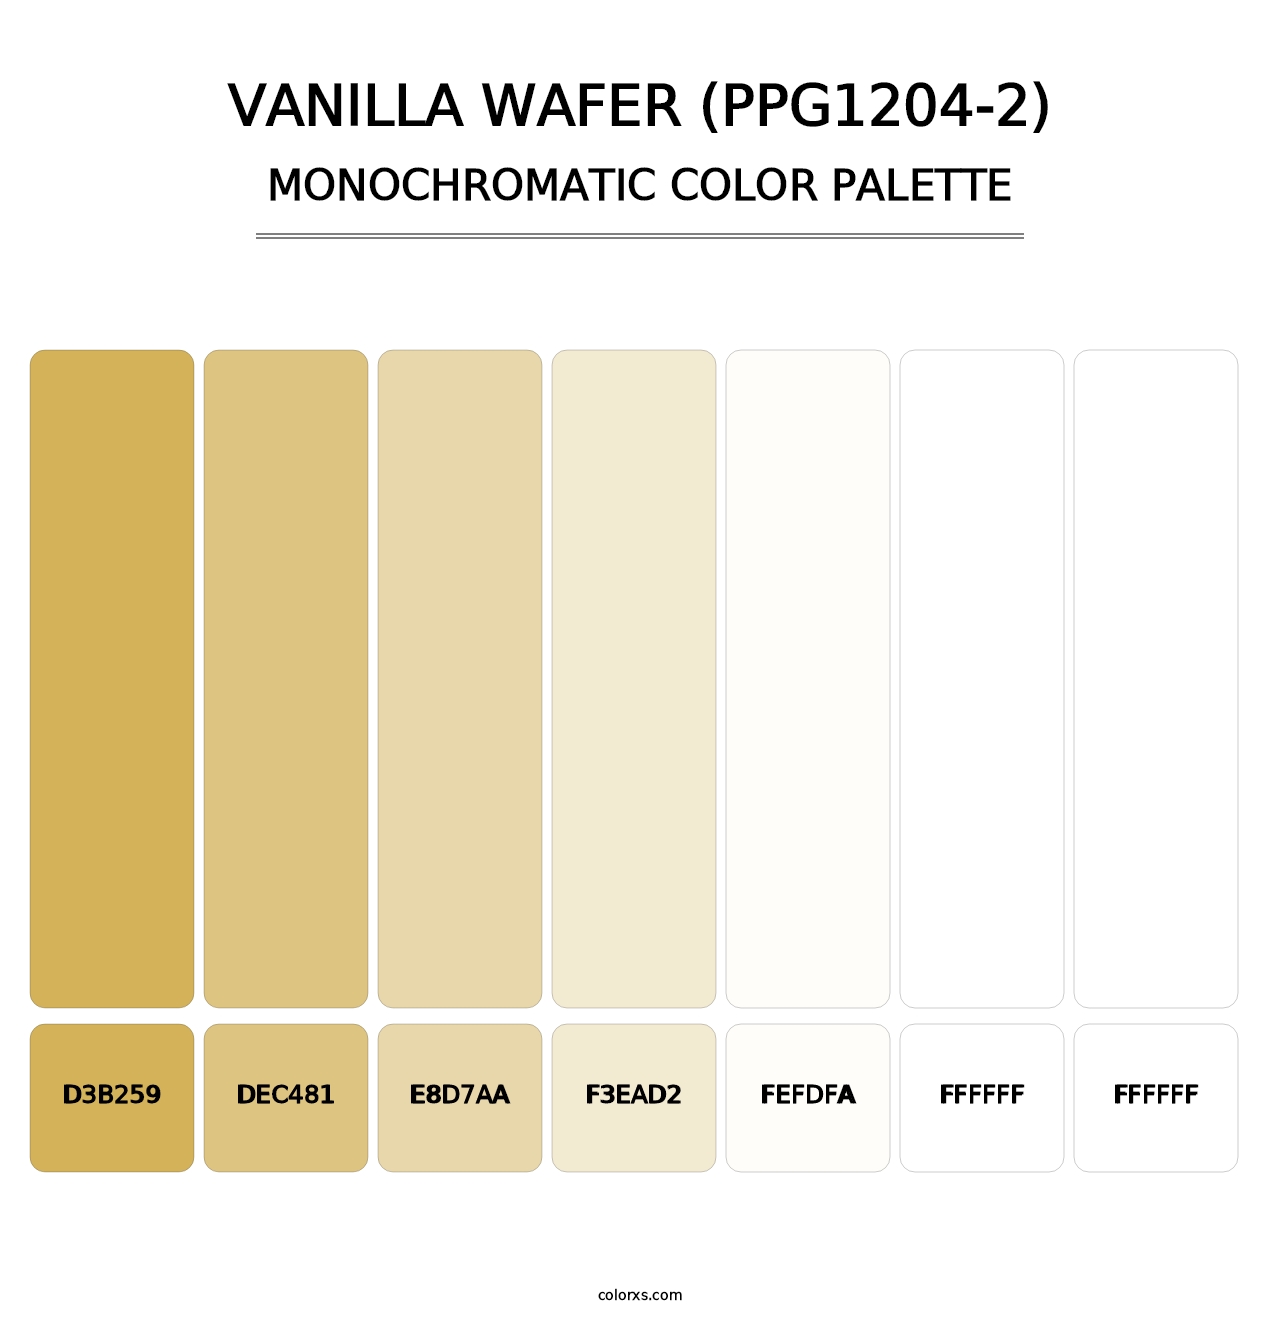 Vanilla Wafer (PPG1204-2) - Monochromatic Color Palette